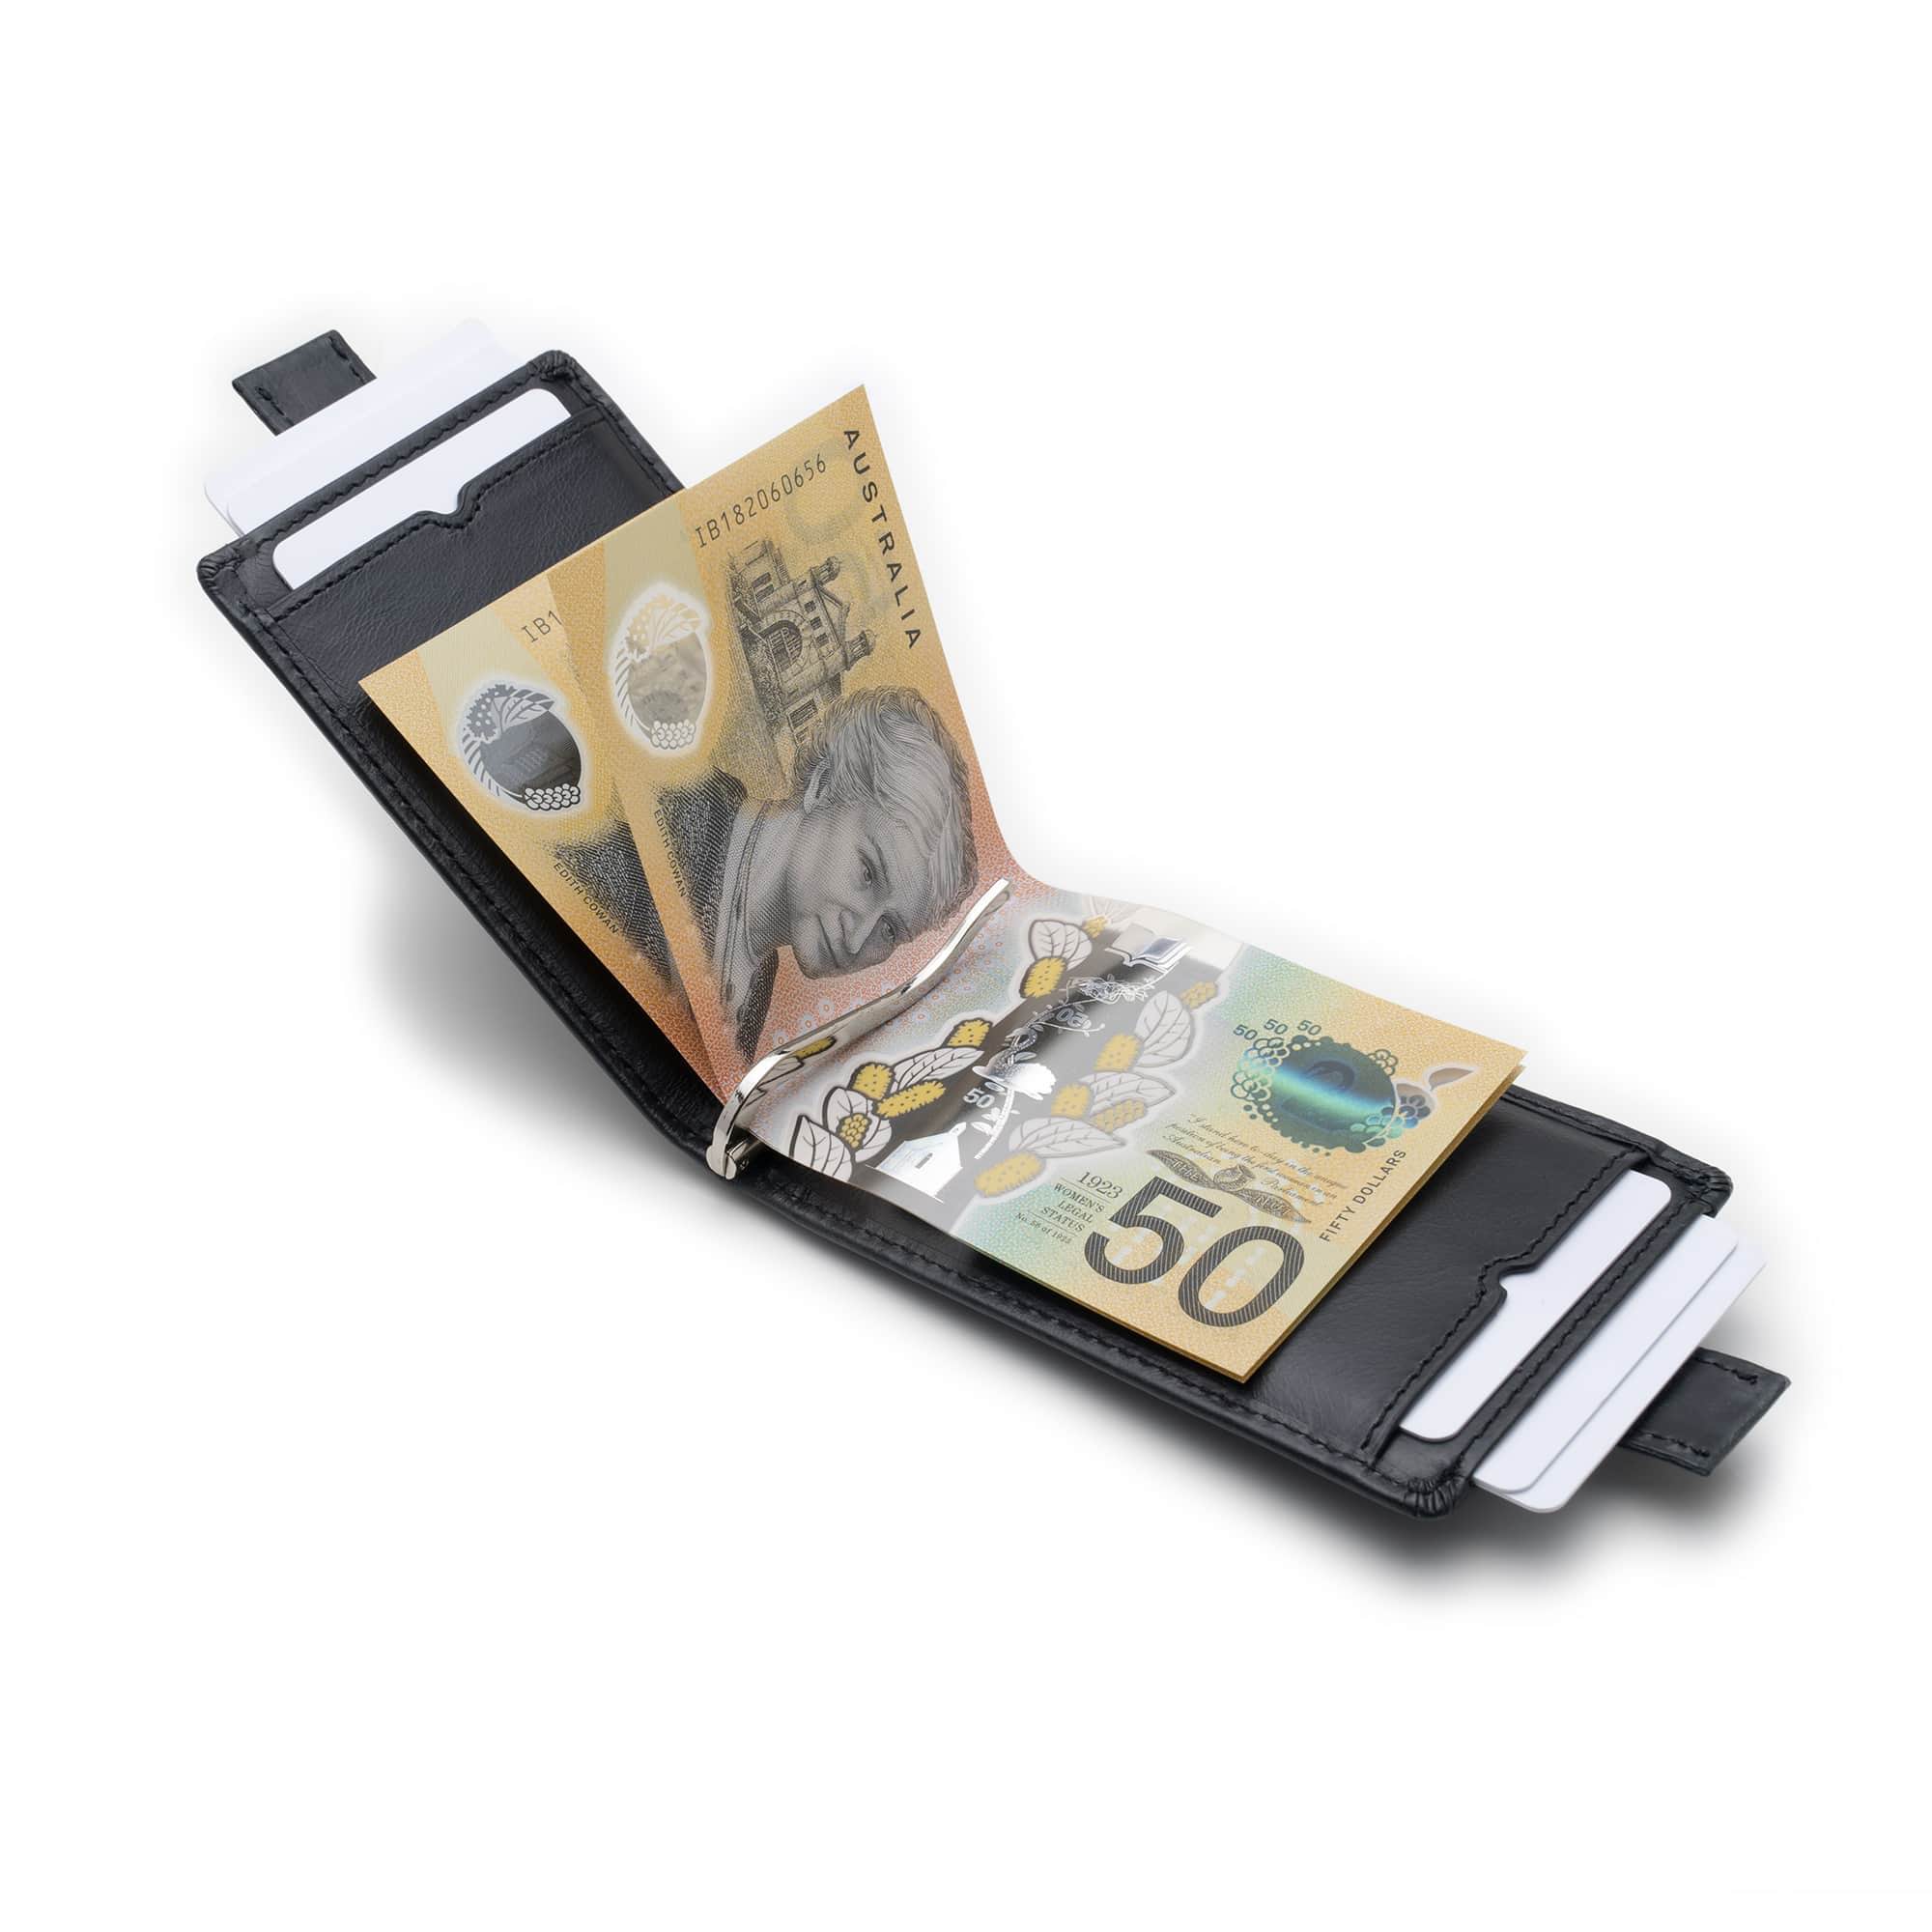 Karakoram2 Money Clip wallet Australia black leather RFID slim mens wallet